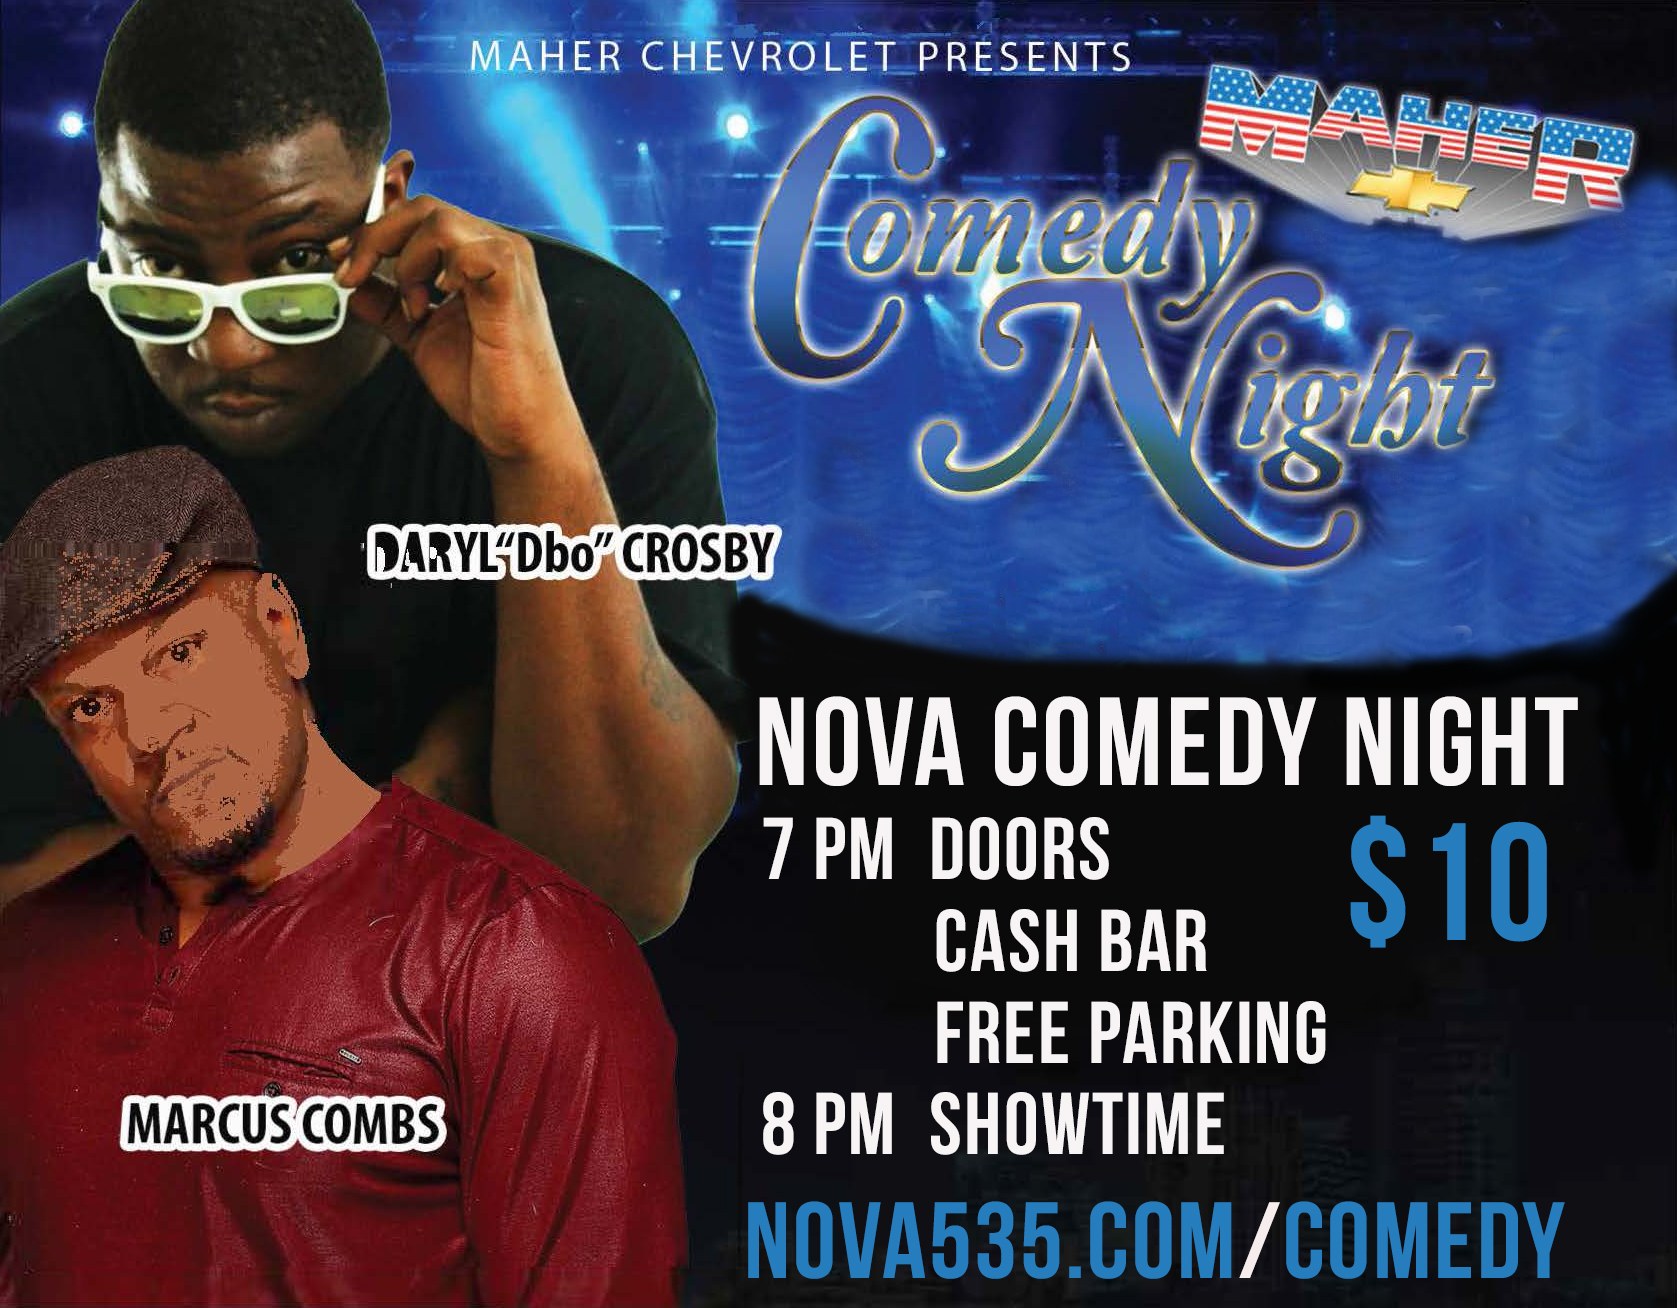 Thursday February 21, 2019 it's NOVA COMEDY NIGHT at historic downtown St. Pete venue NOVA 535. Doors 7 pm Showtime 8 pm.